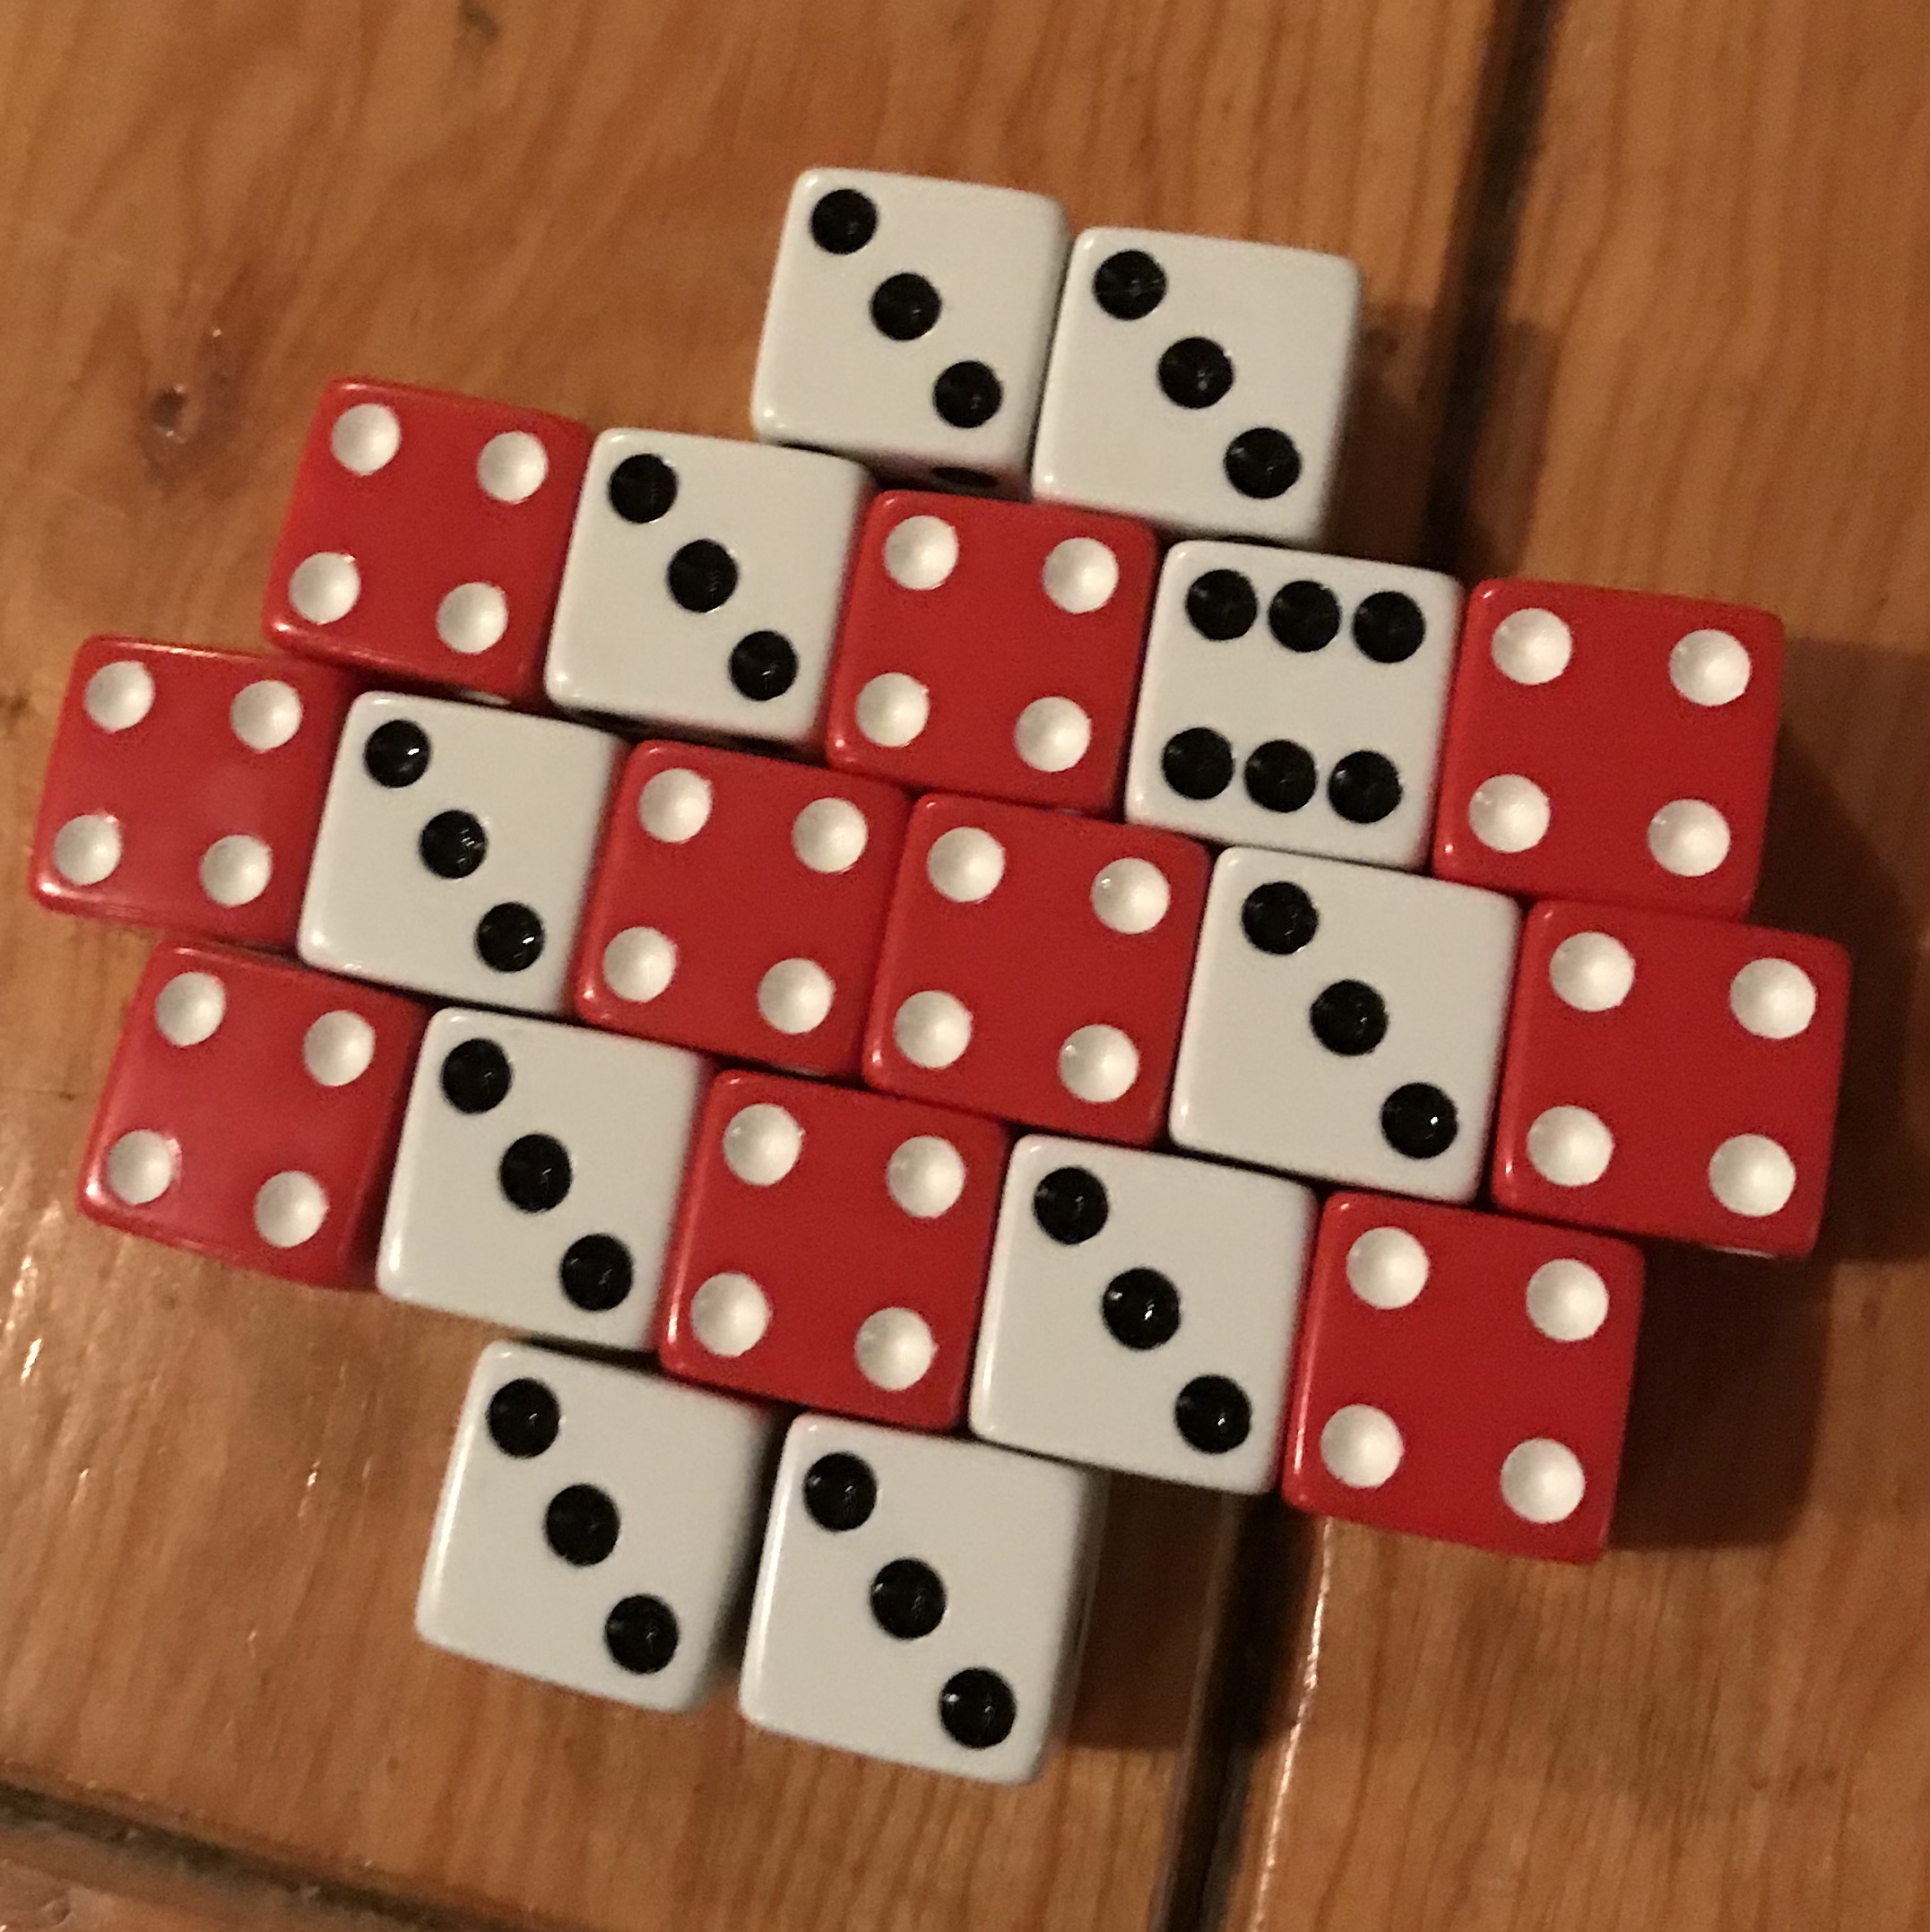 Image of playing Tenzi dice game.